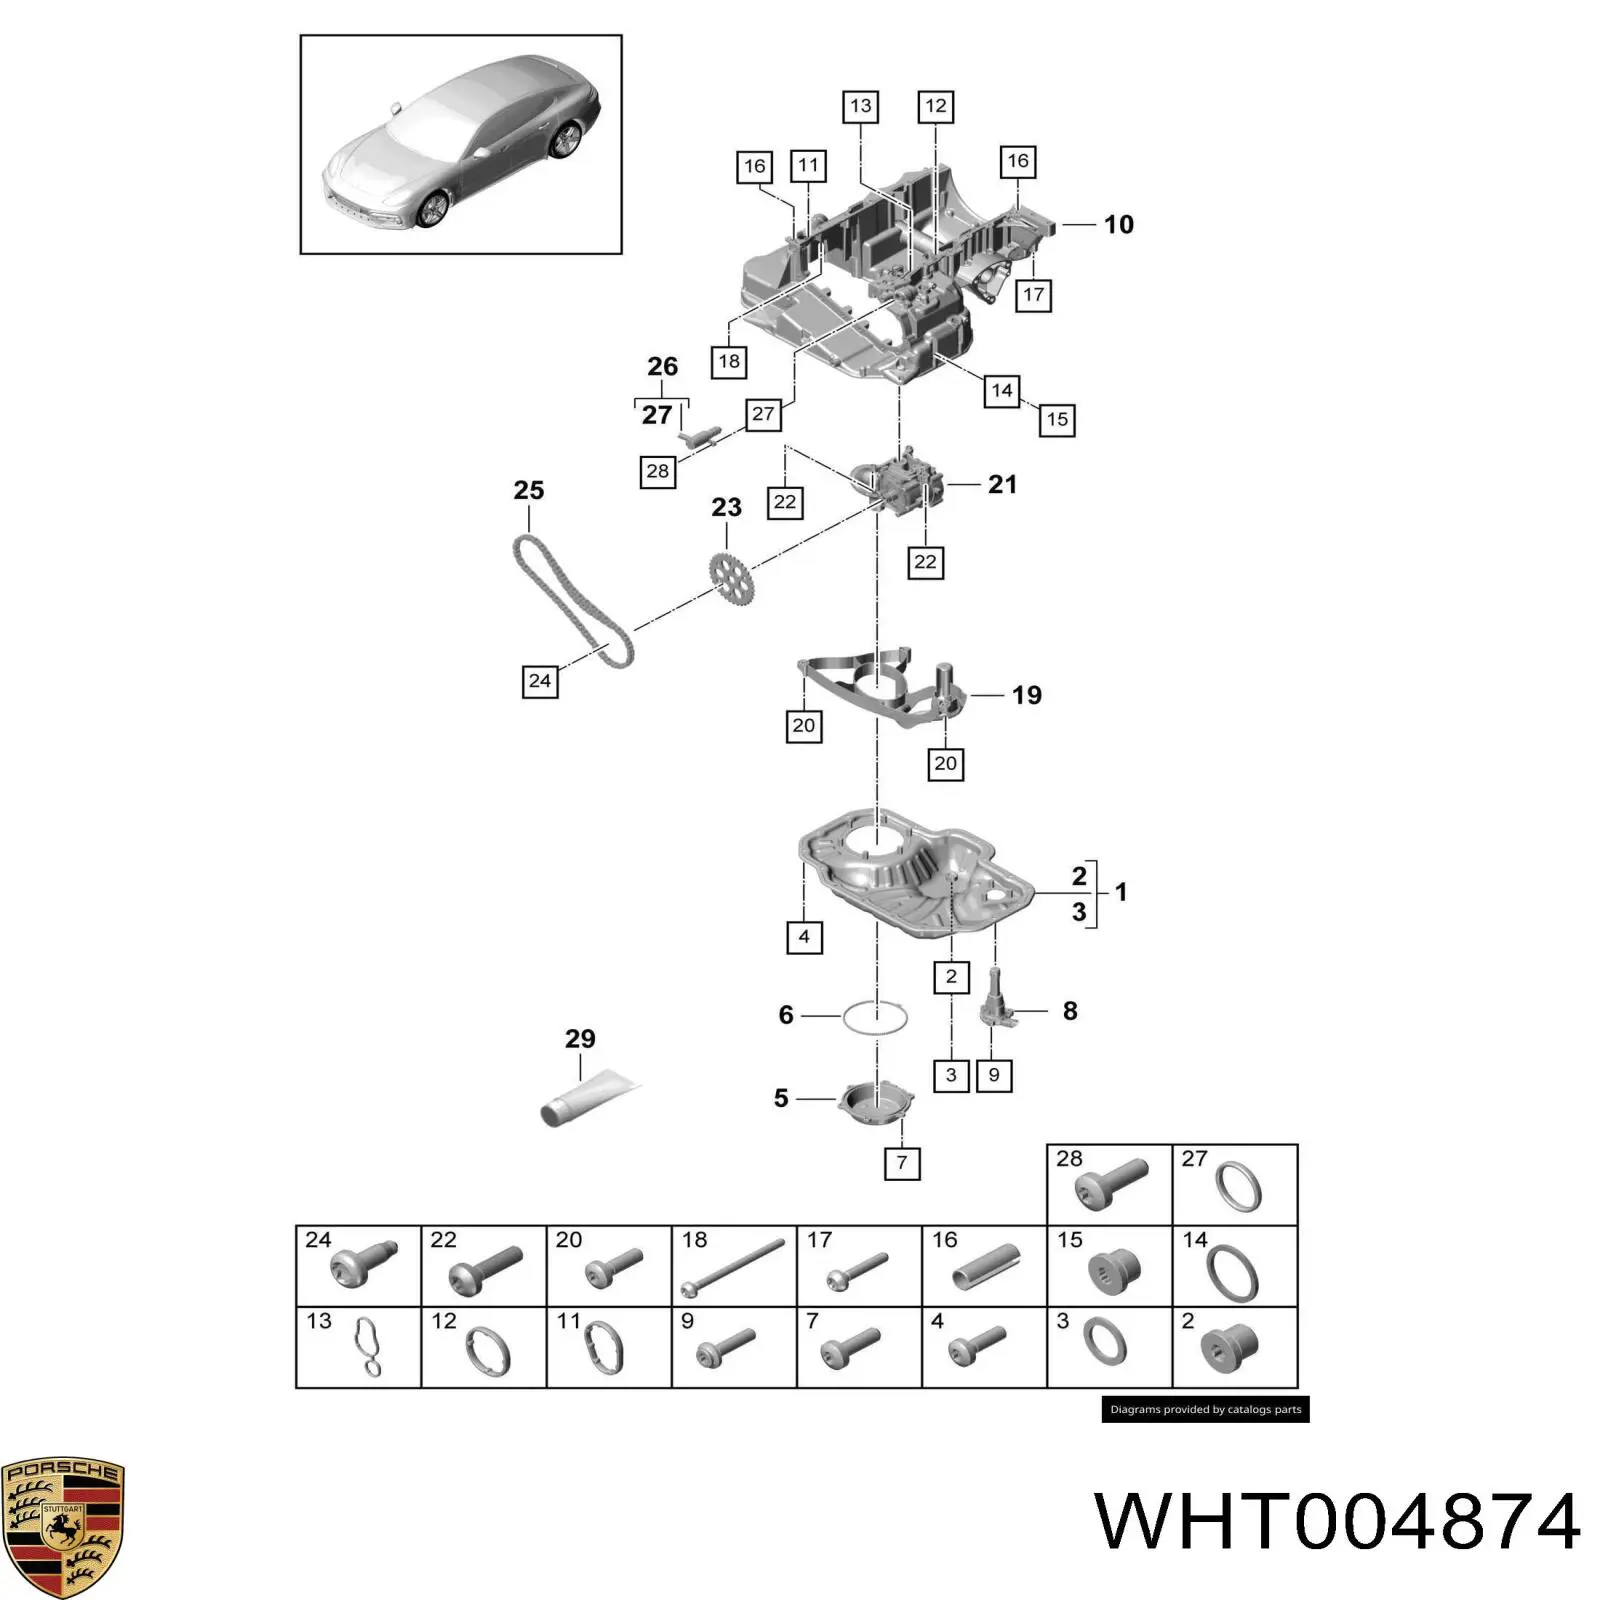 WHT004874 Porsche tornnillo, cárter del motor